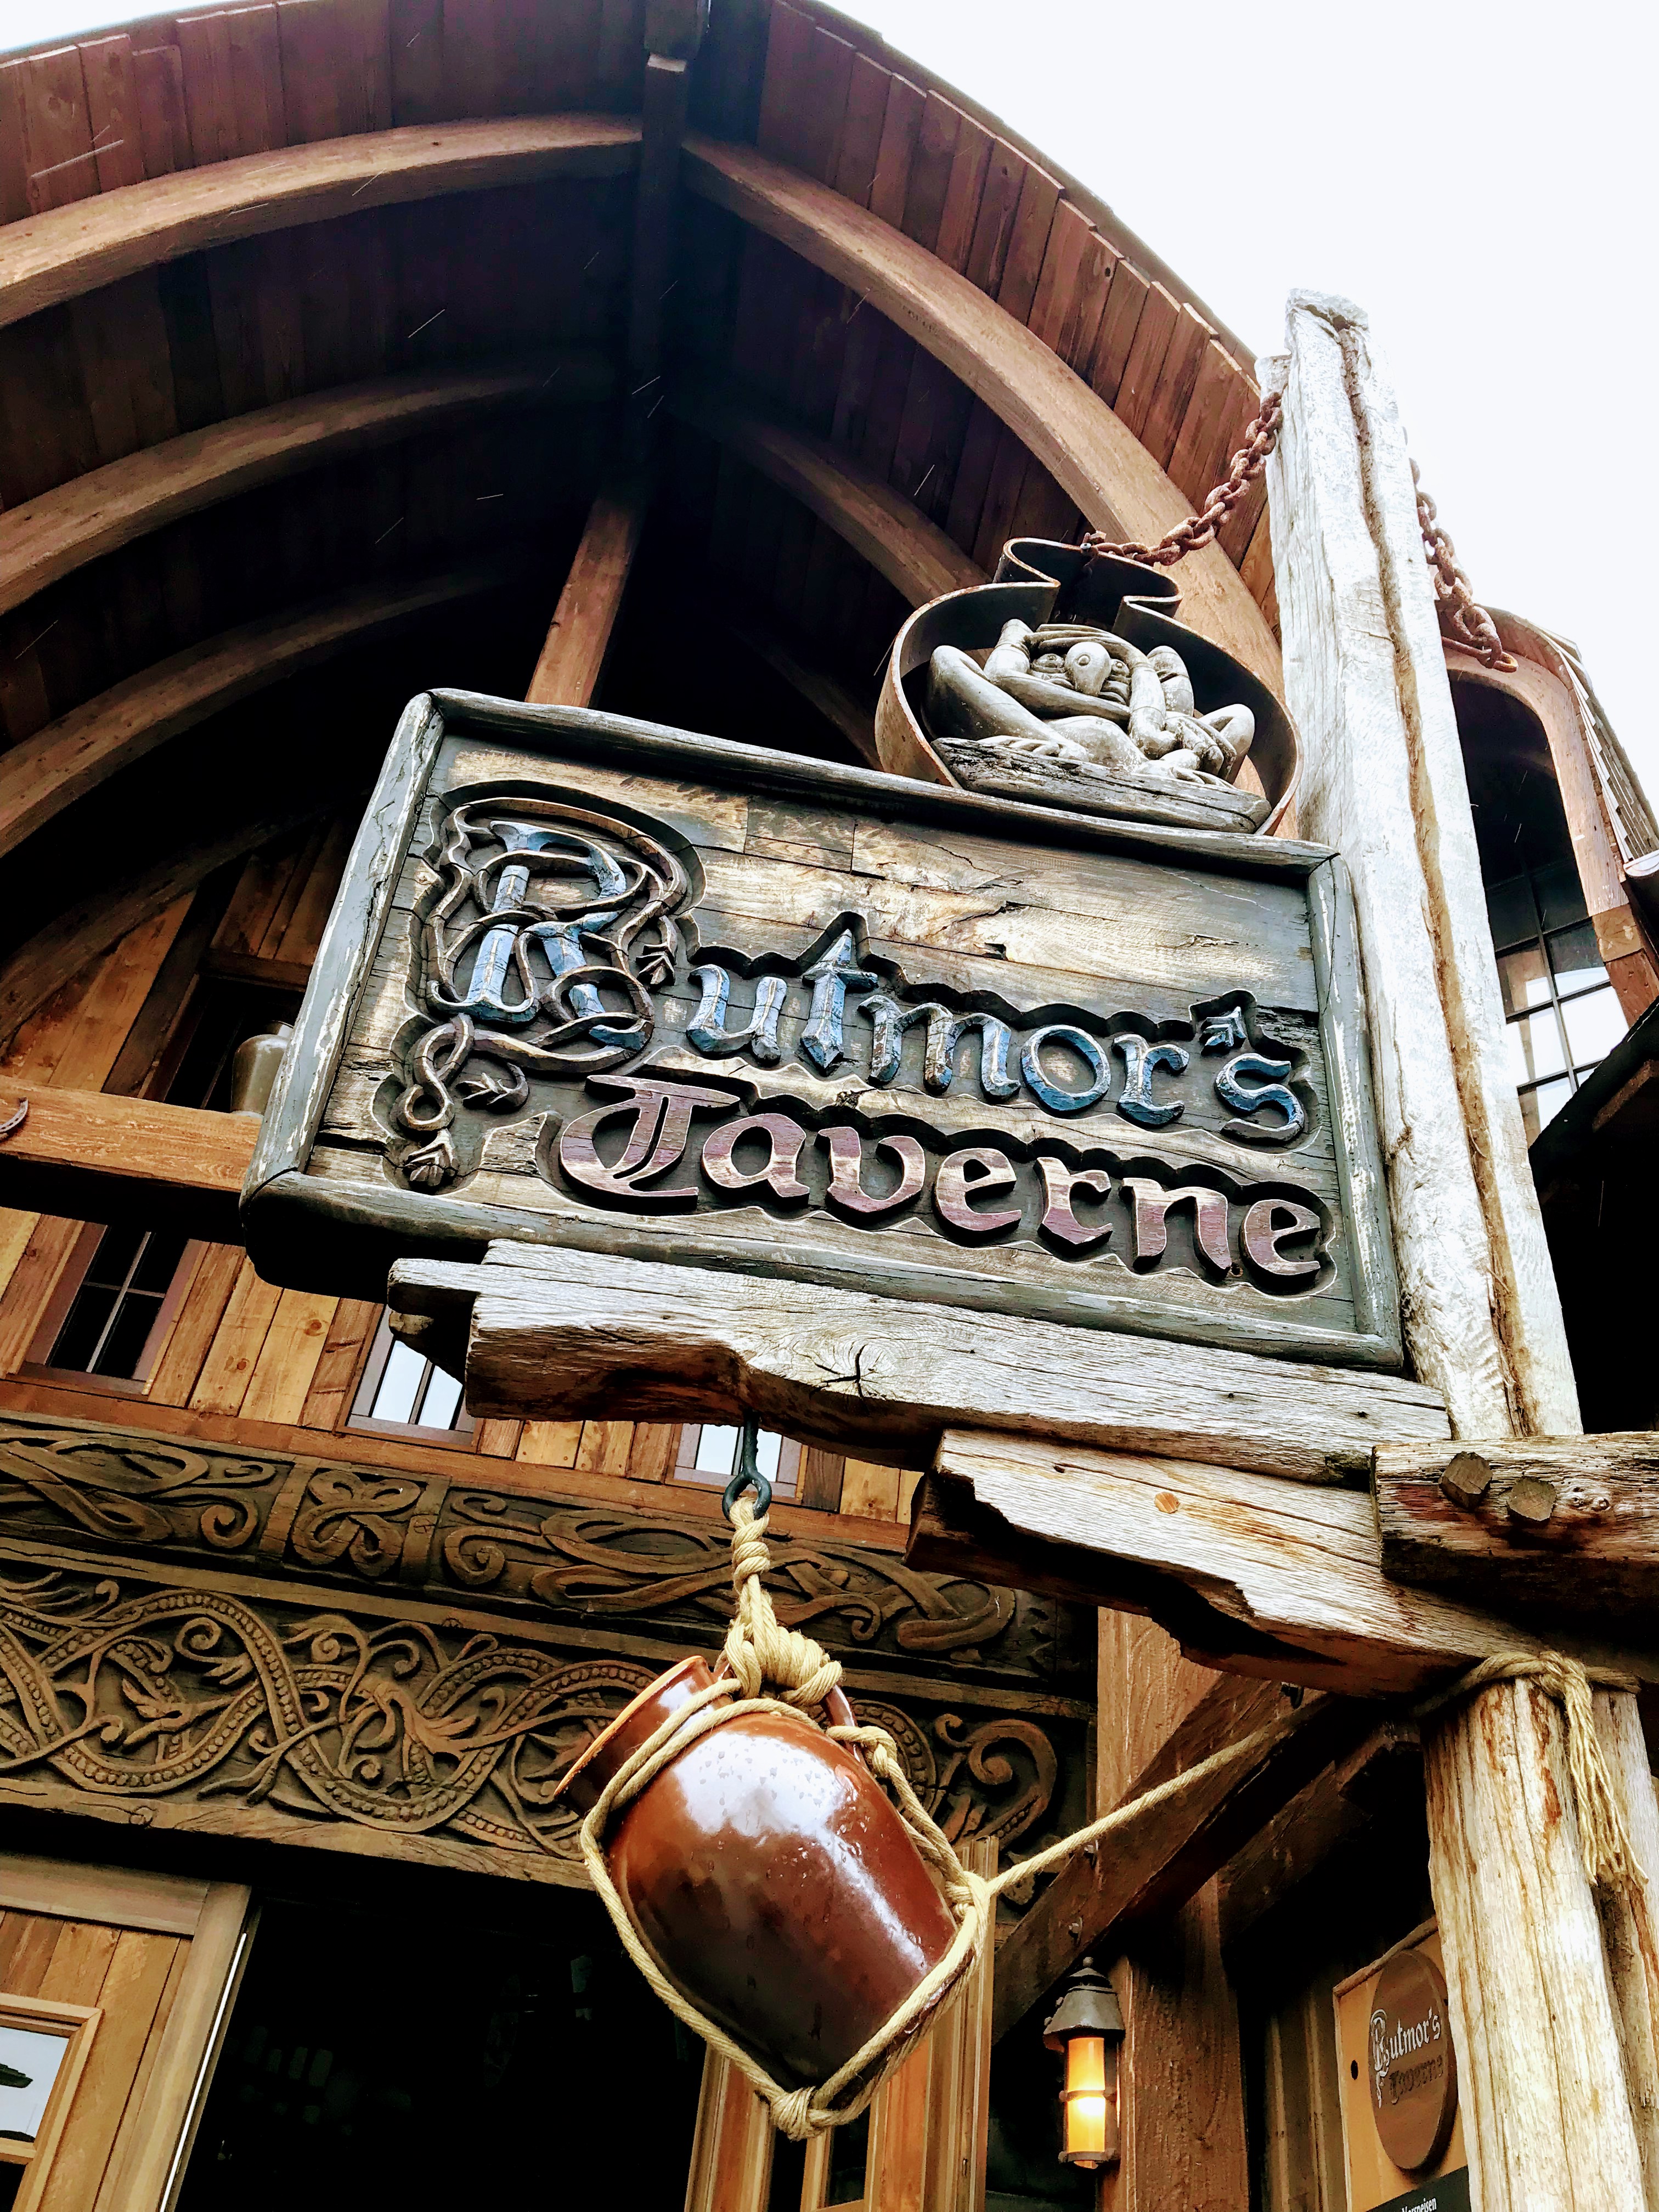 Rutmor’s Taverne in Phantasialand